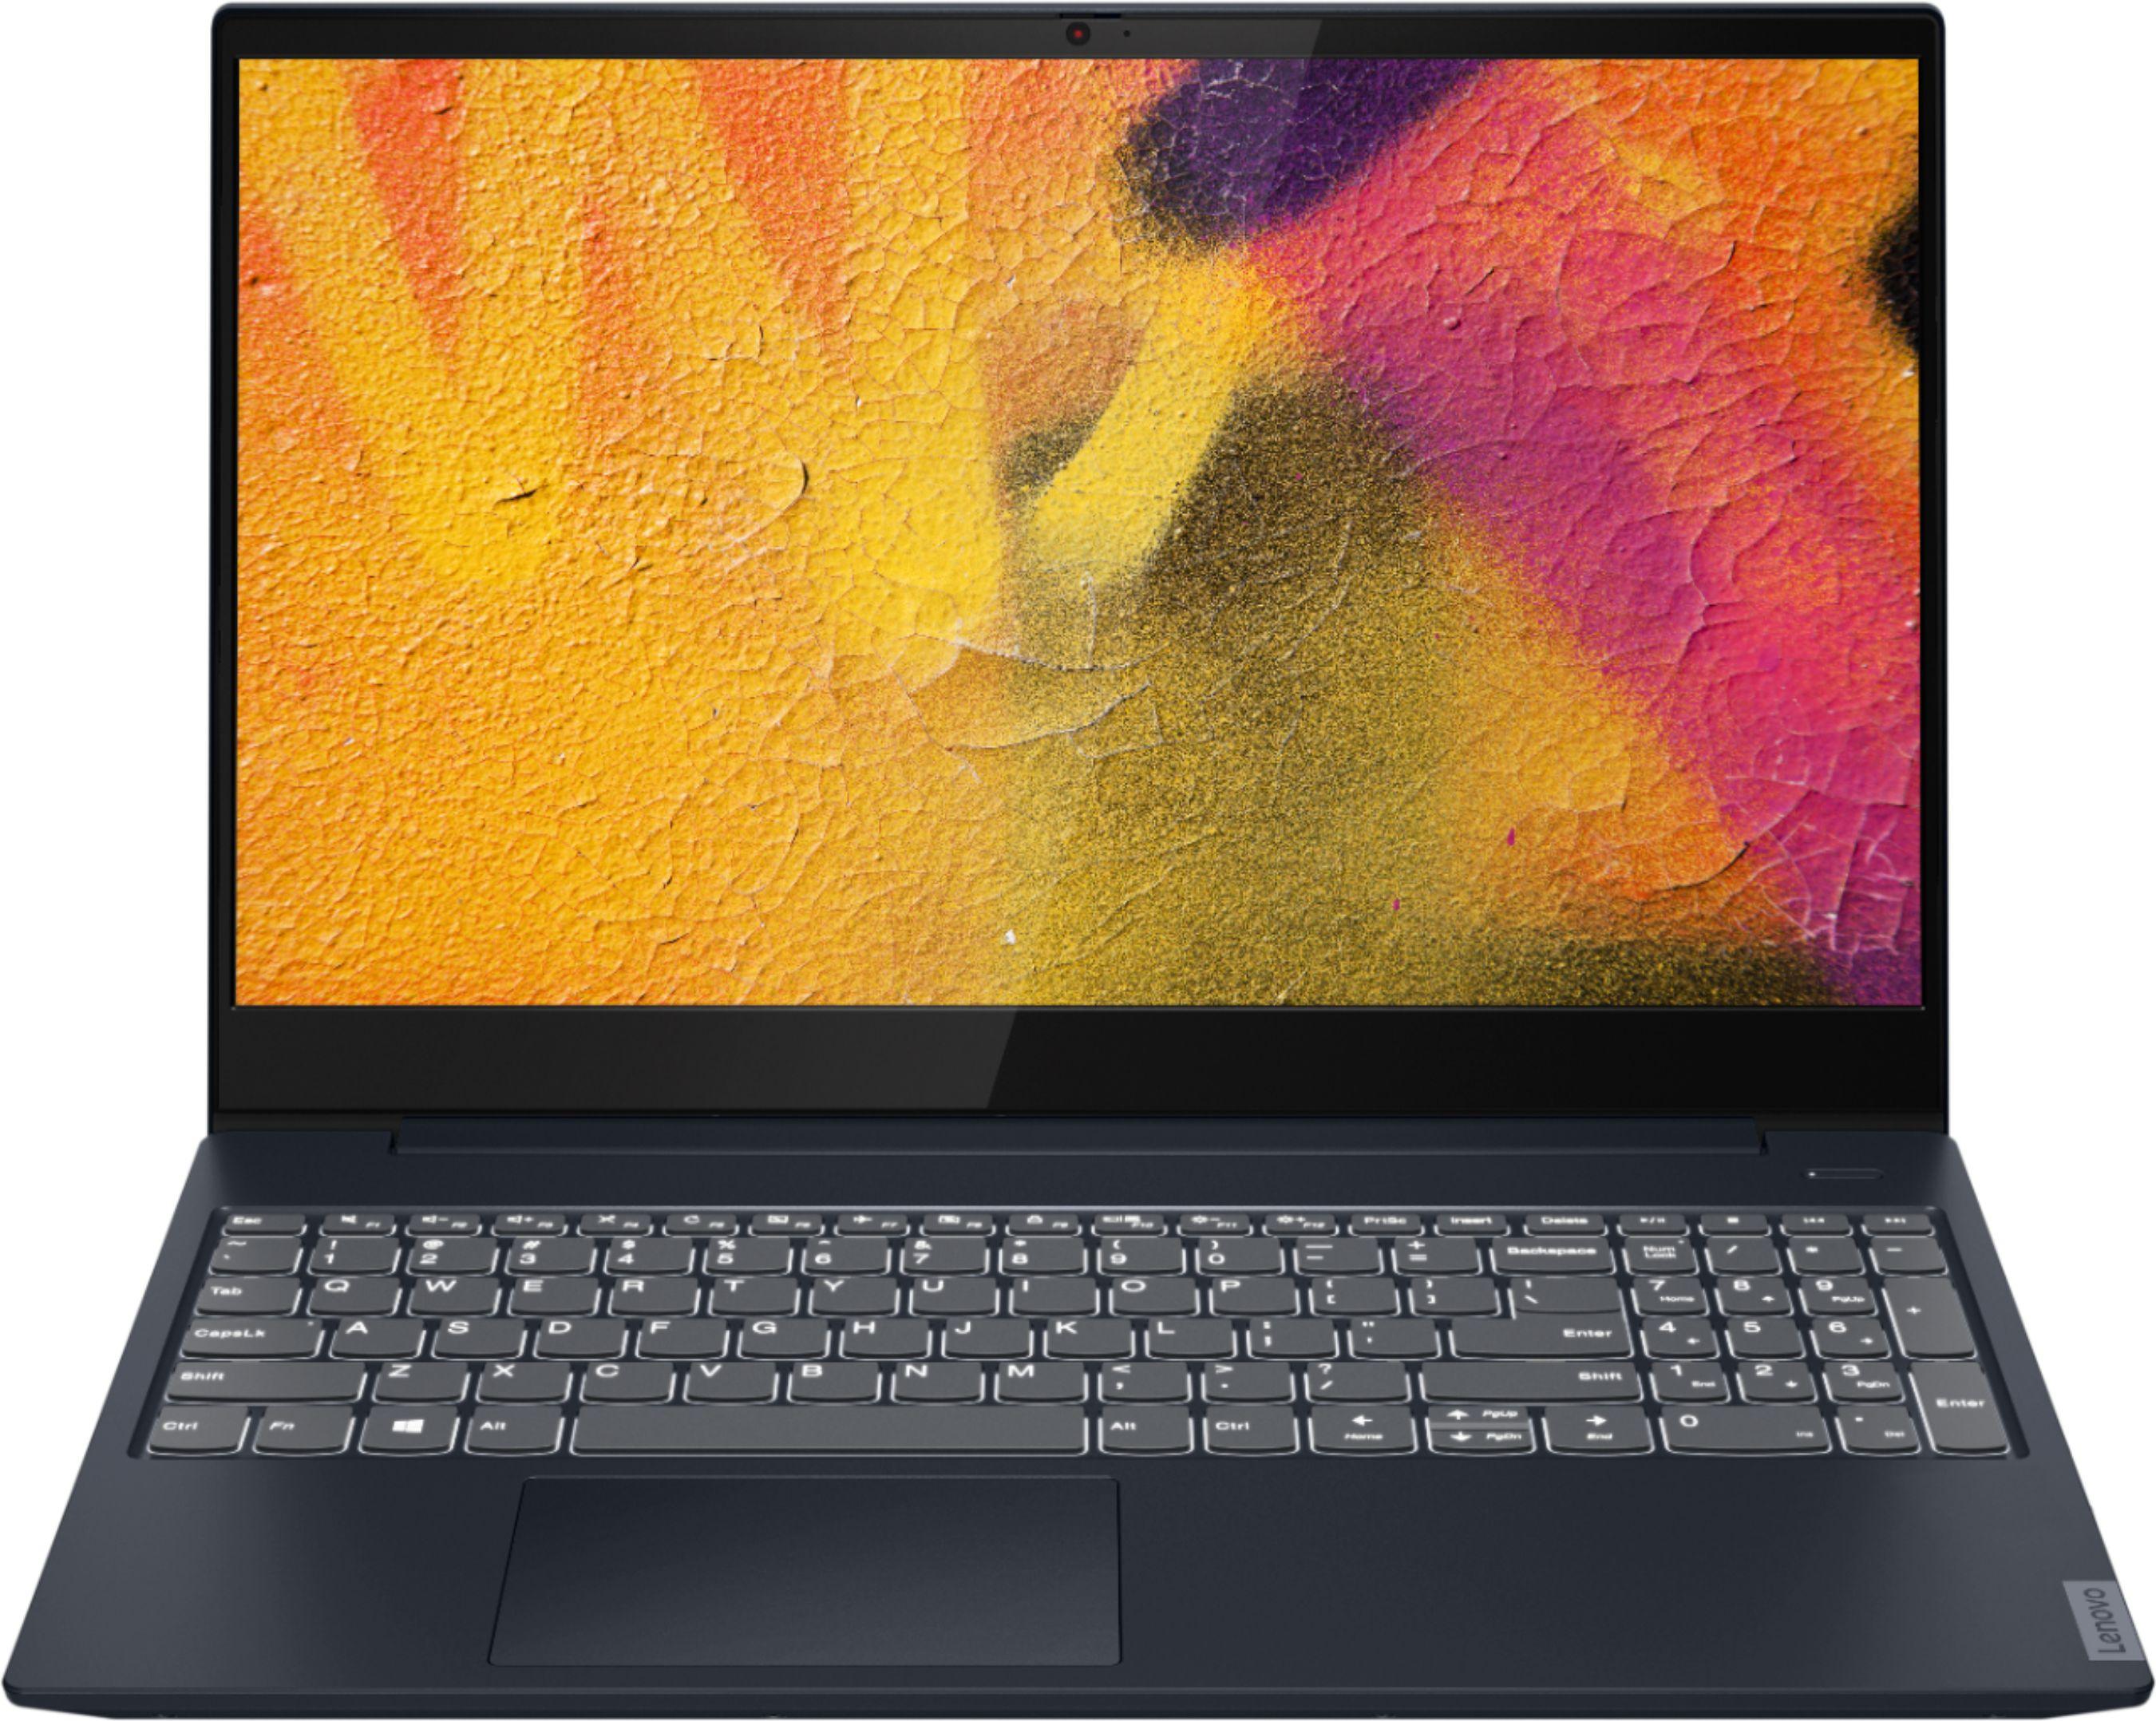 Lenovo IdeaPad S340 15in Ryzen 7 12GB 512GB Notebook Laptop for $549.99 Shipped